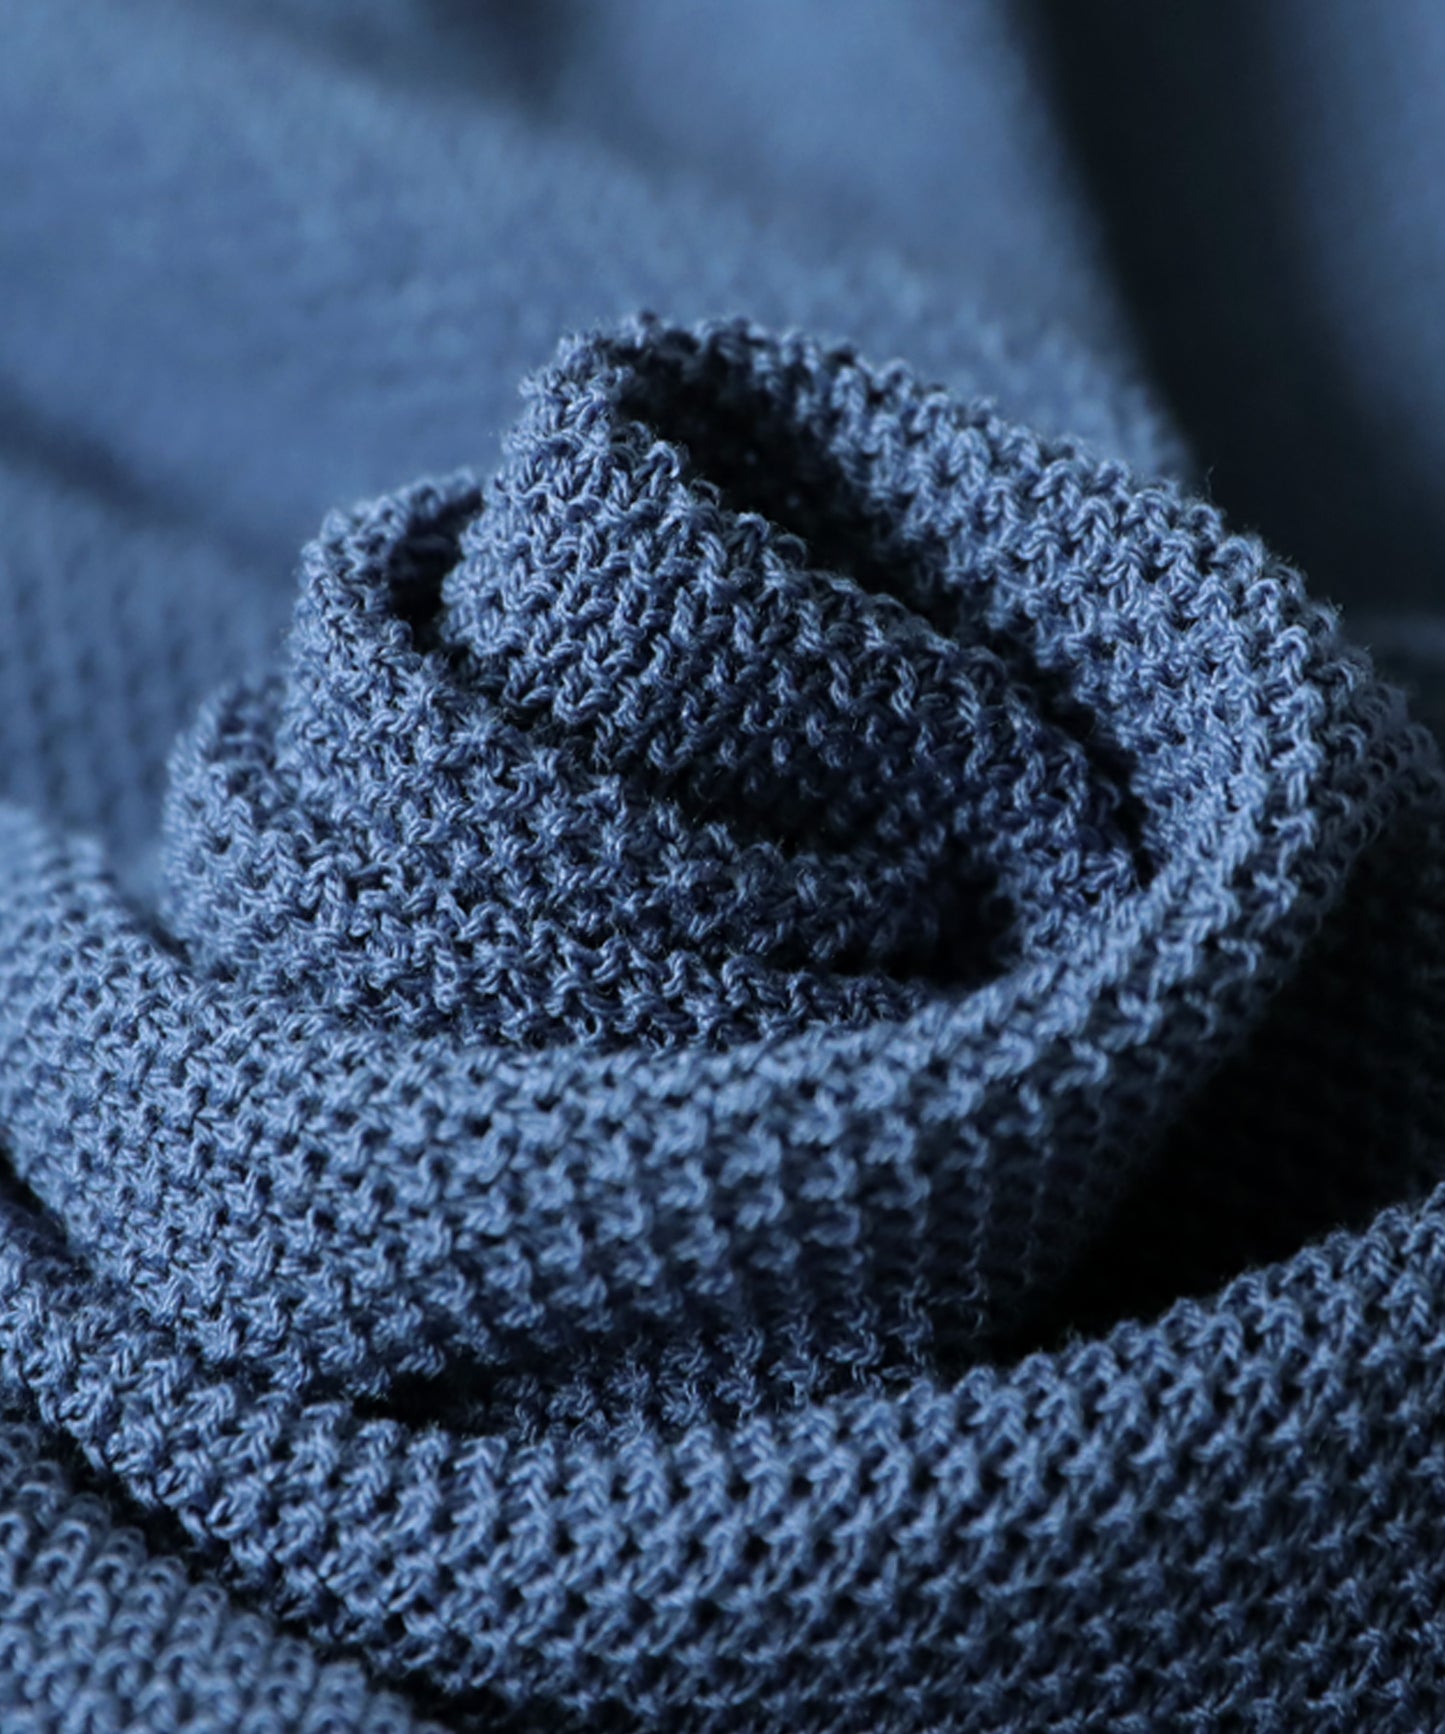 Linen-Like Knit Tops Ladies